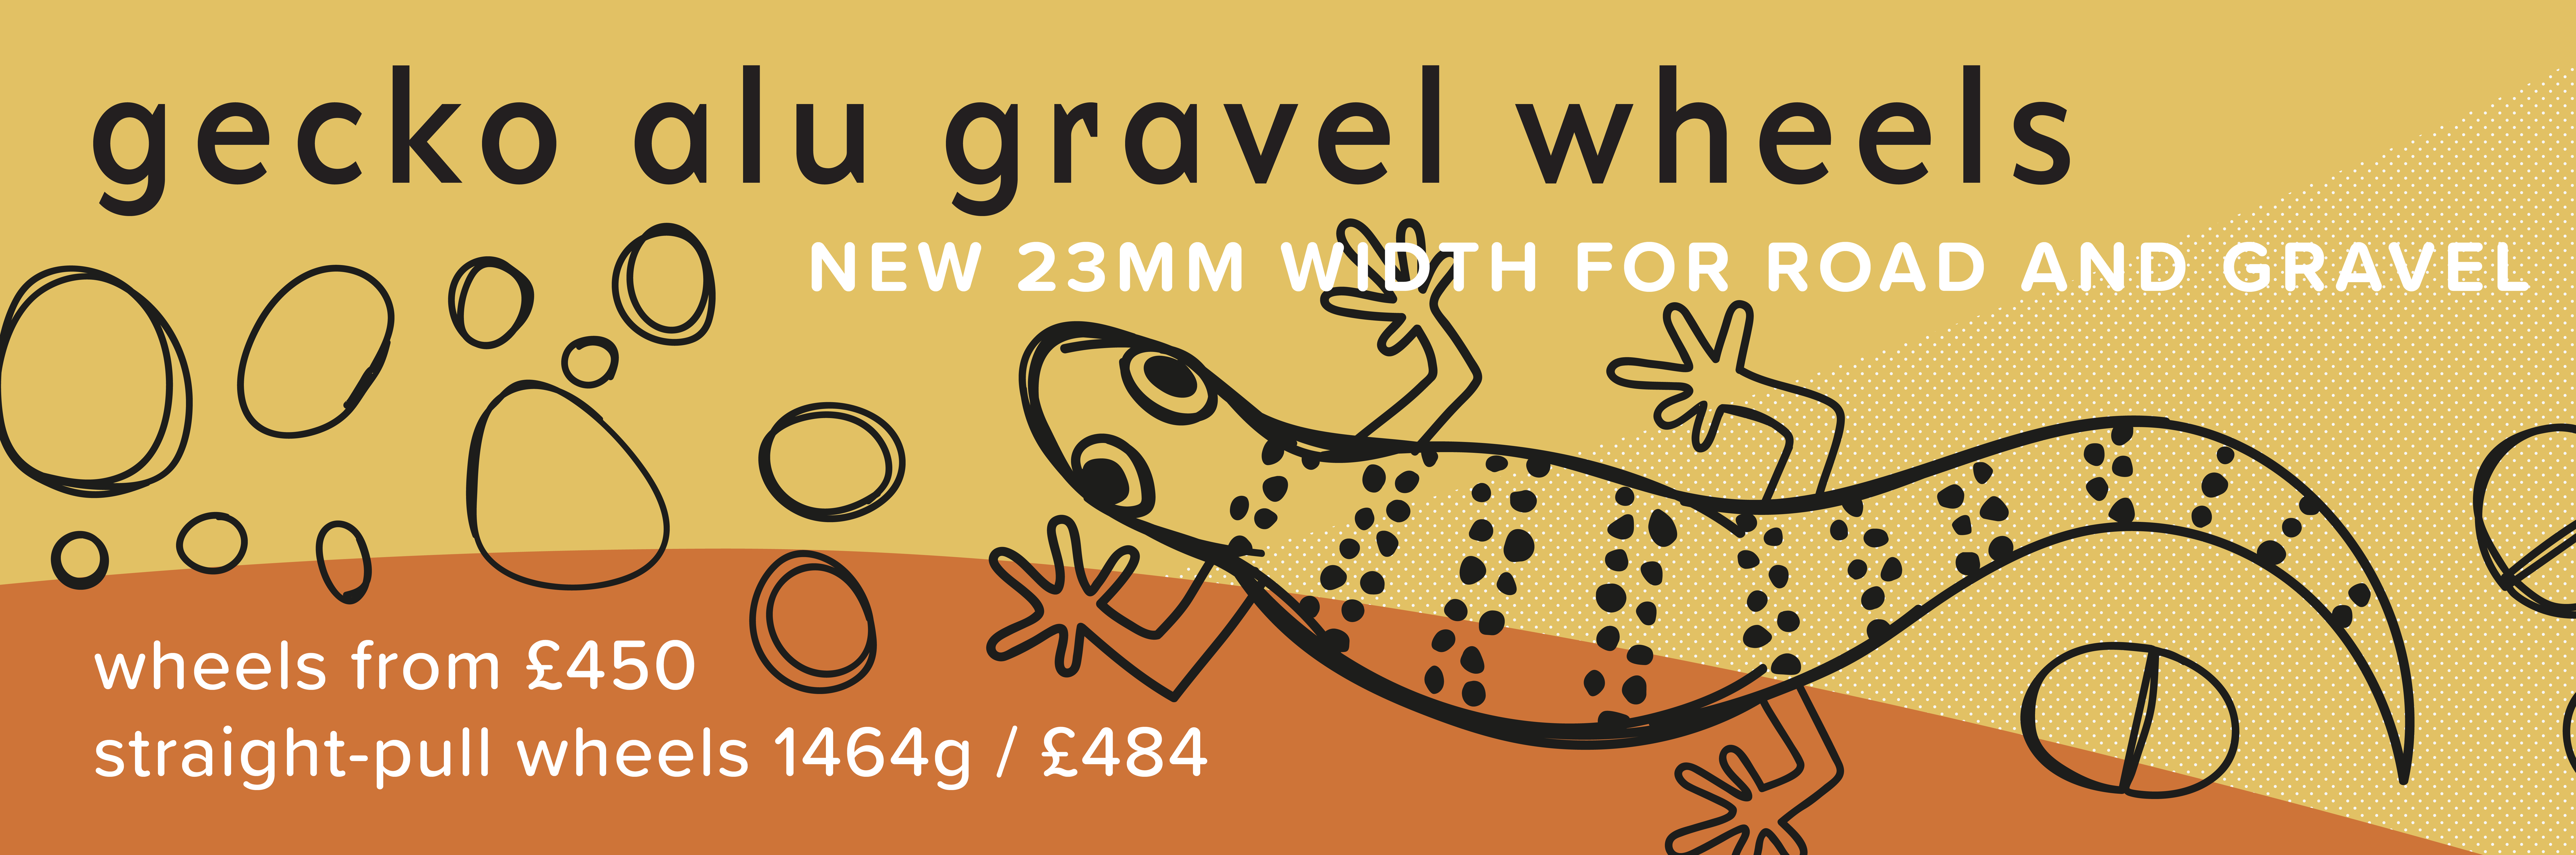 Gecko alu gravel wheels